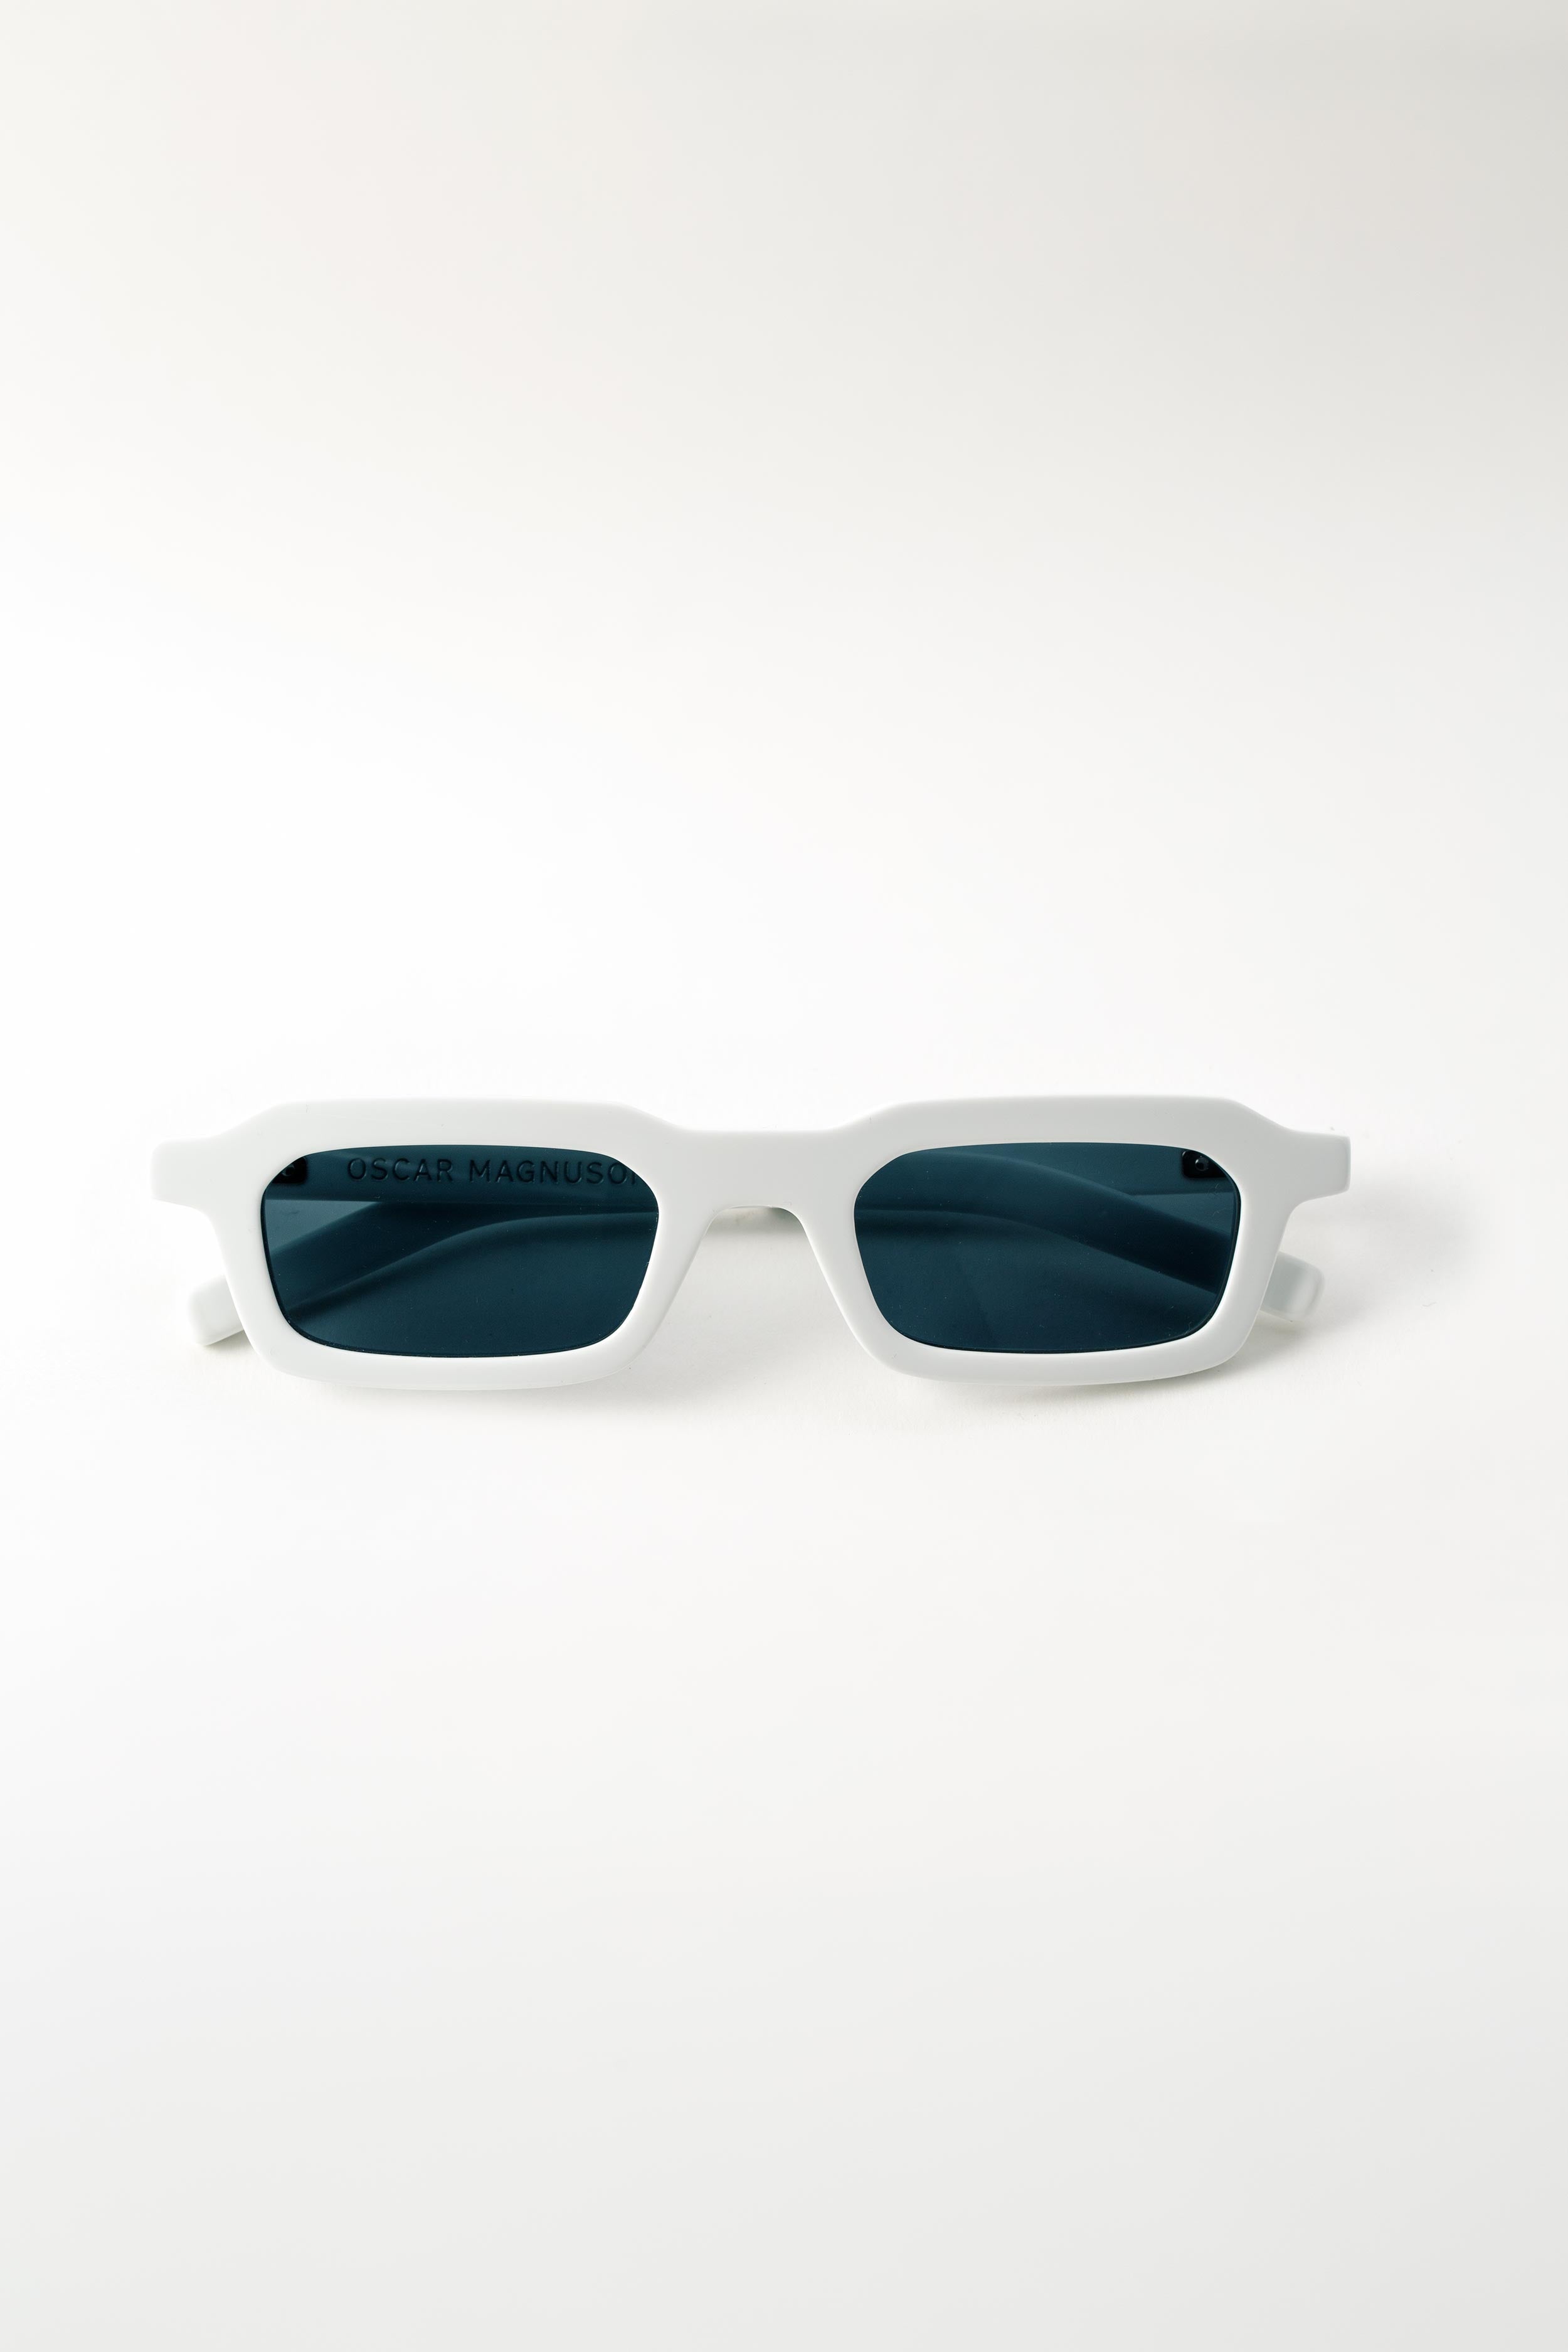 Block Grey Marble Retro Sunglasses